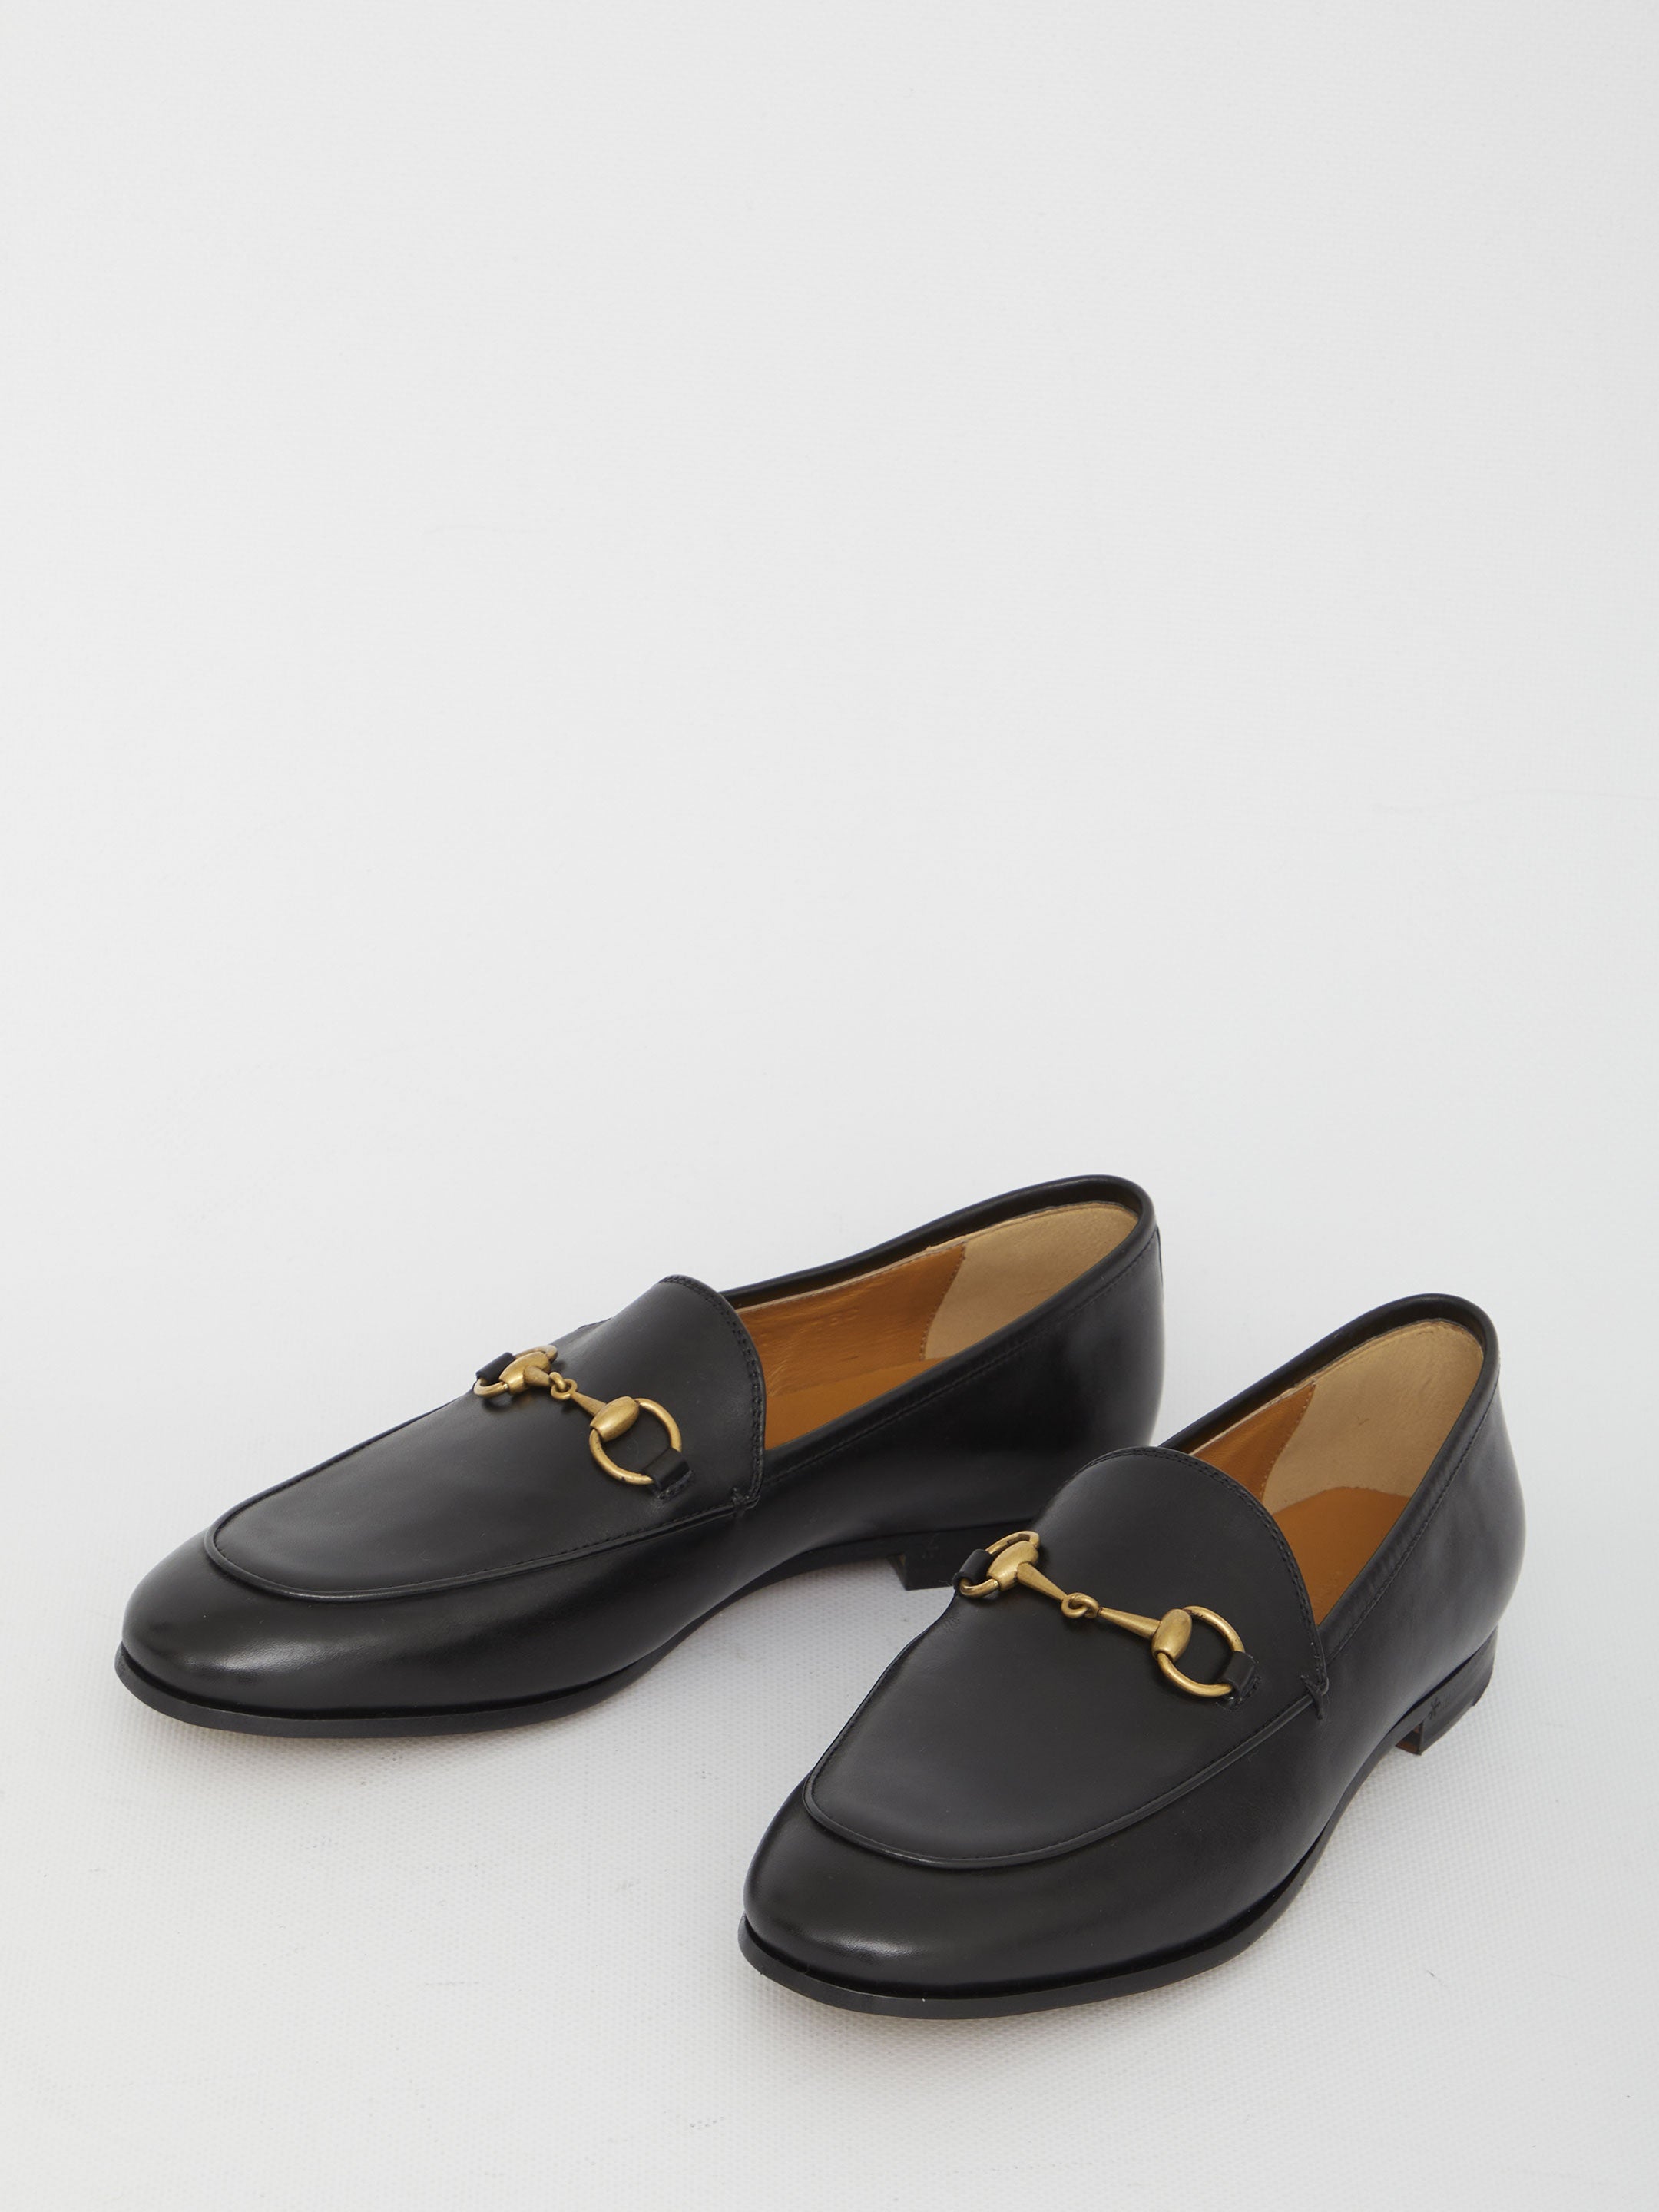 GUCCI-OUTLET-SALE-Jordan-loafers-Flache-Schuhe-38-BLACK-ARCHIVE-COLLECTION-4.jpg